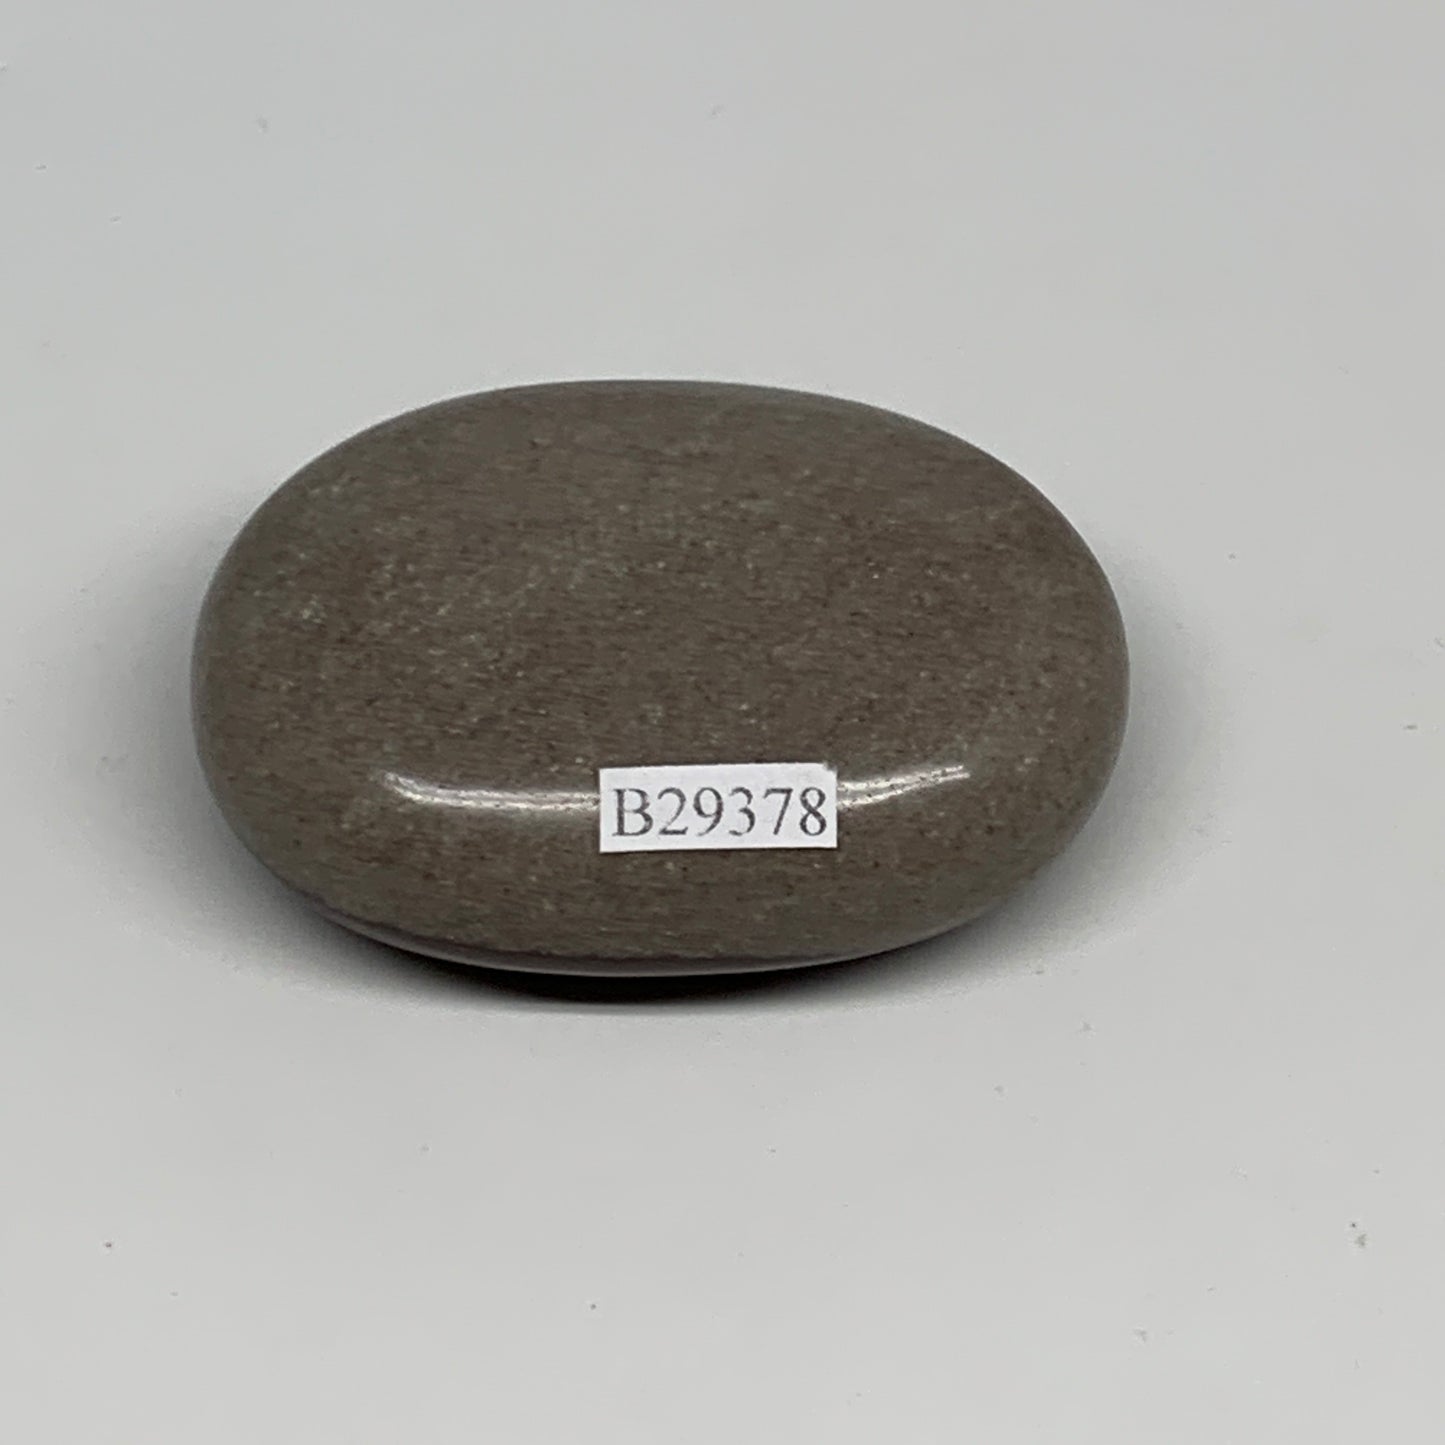 94.9g, 2.4"x1.7"x0.9", Narmada Shiva Lingam Palm-Stone Polished, B29378